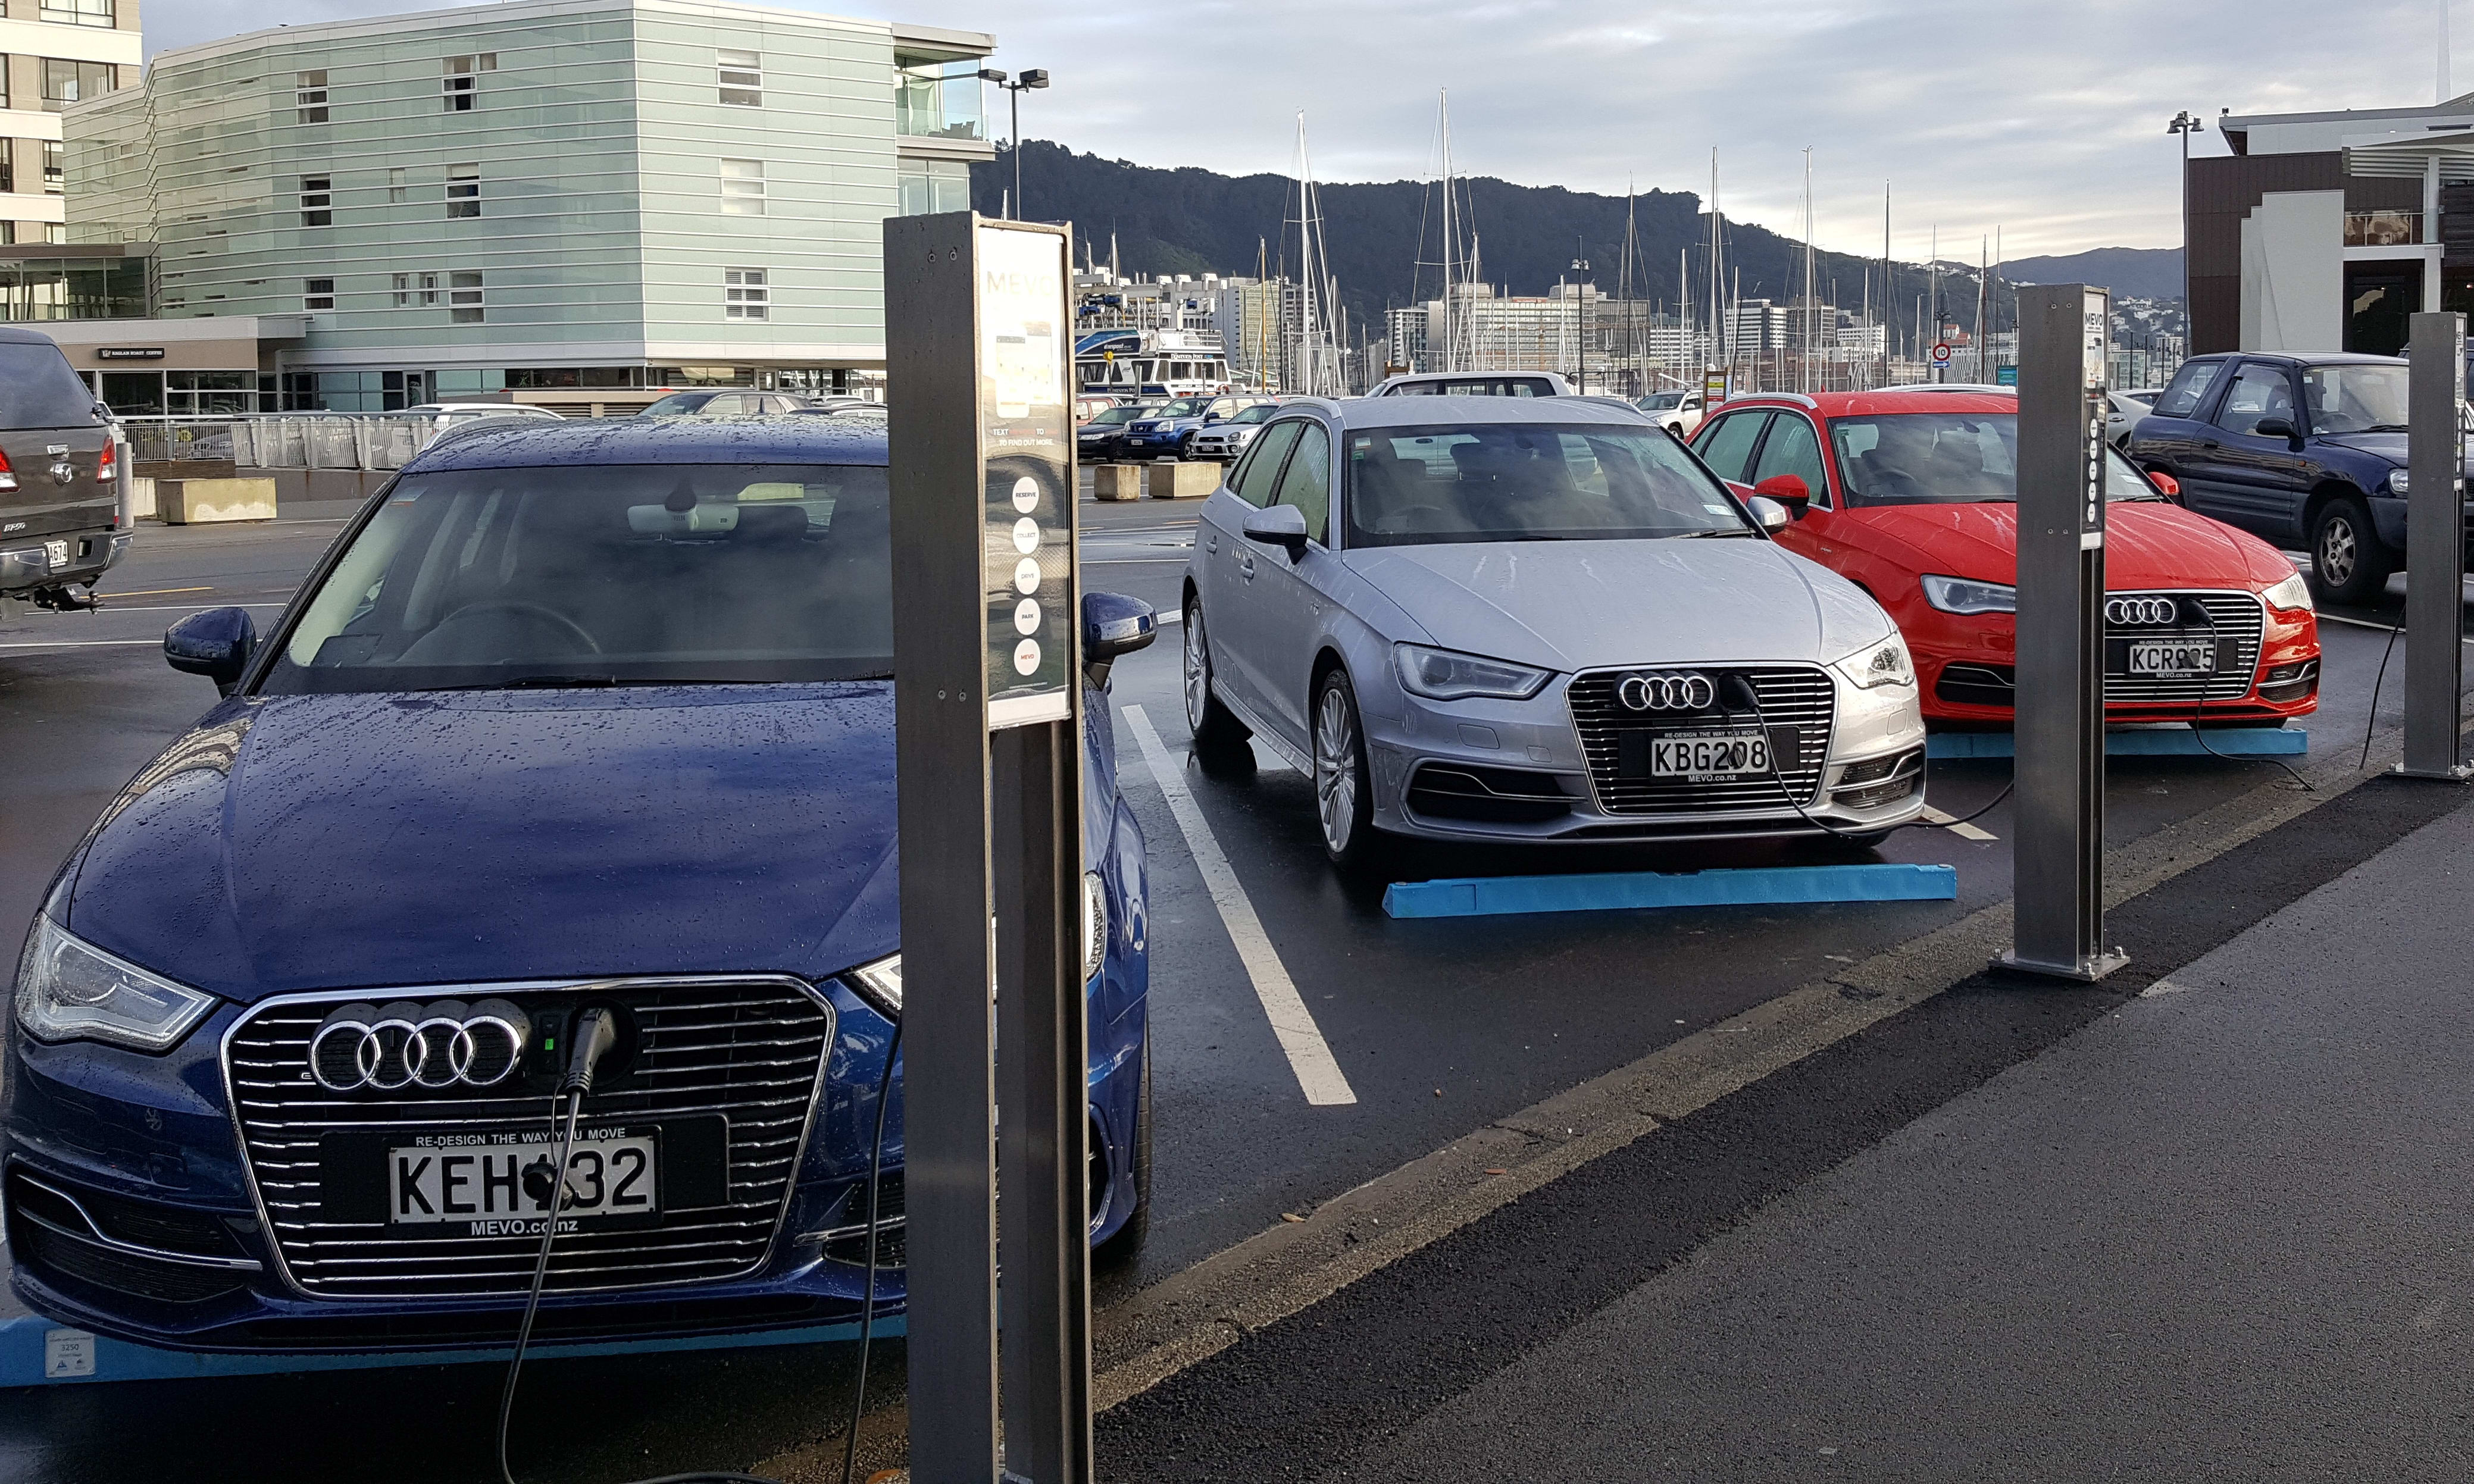 MEVO car share site in Wellington